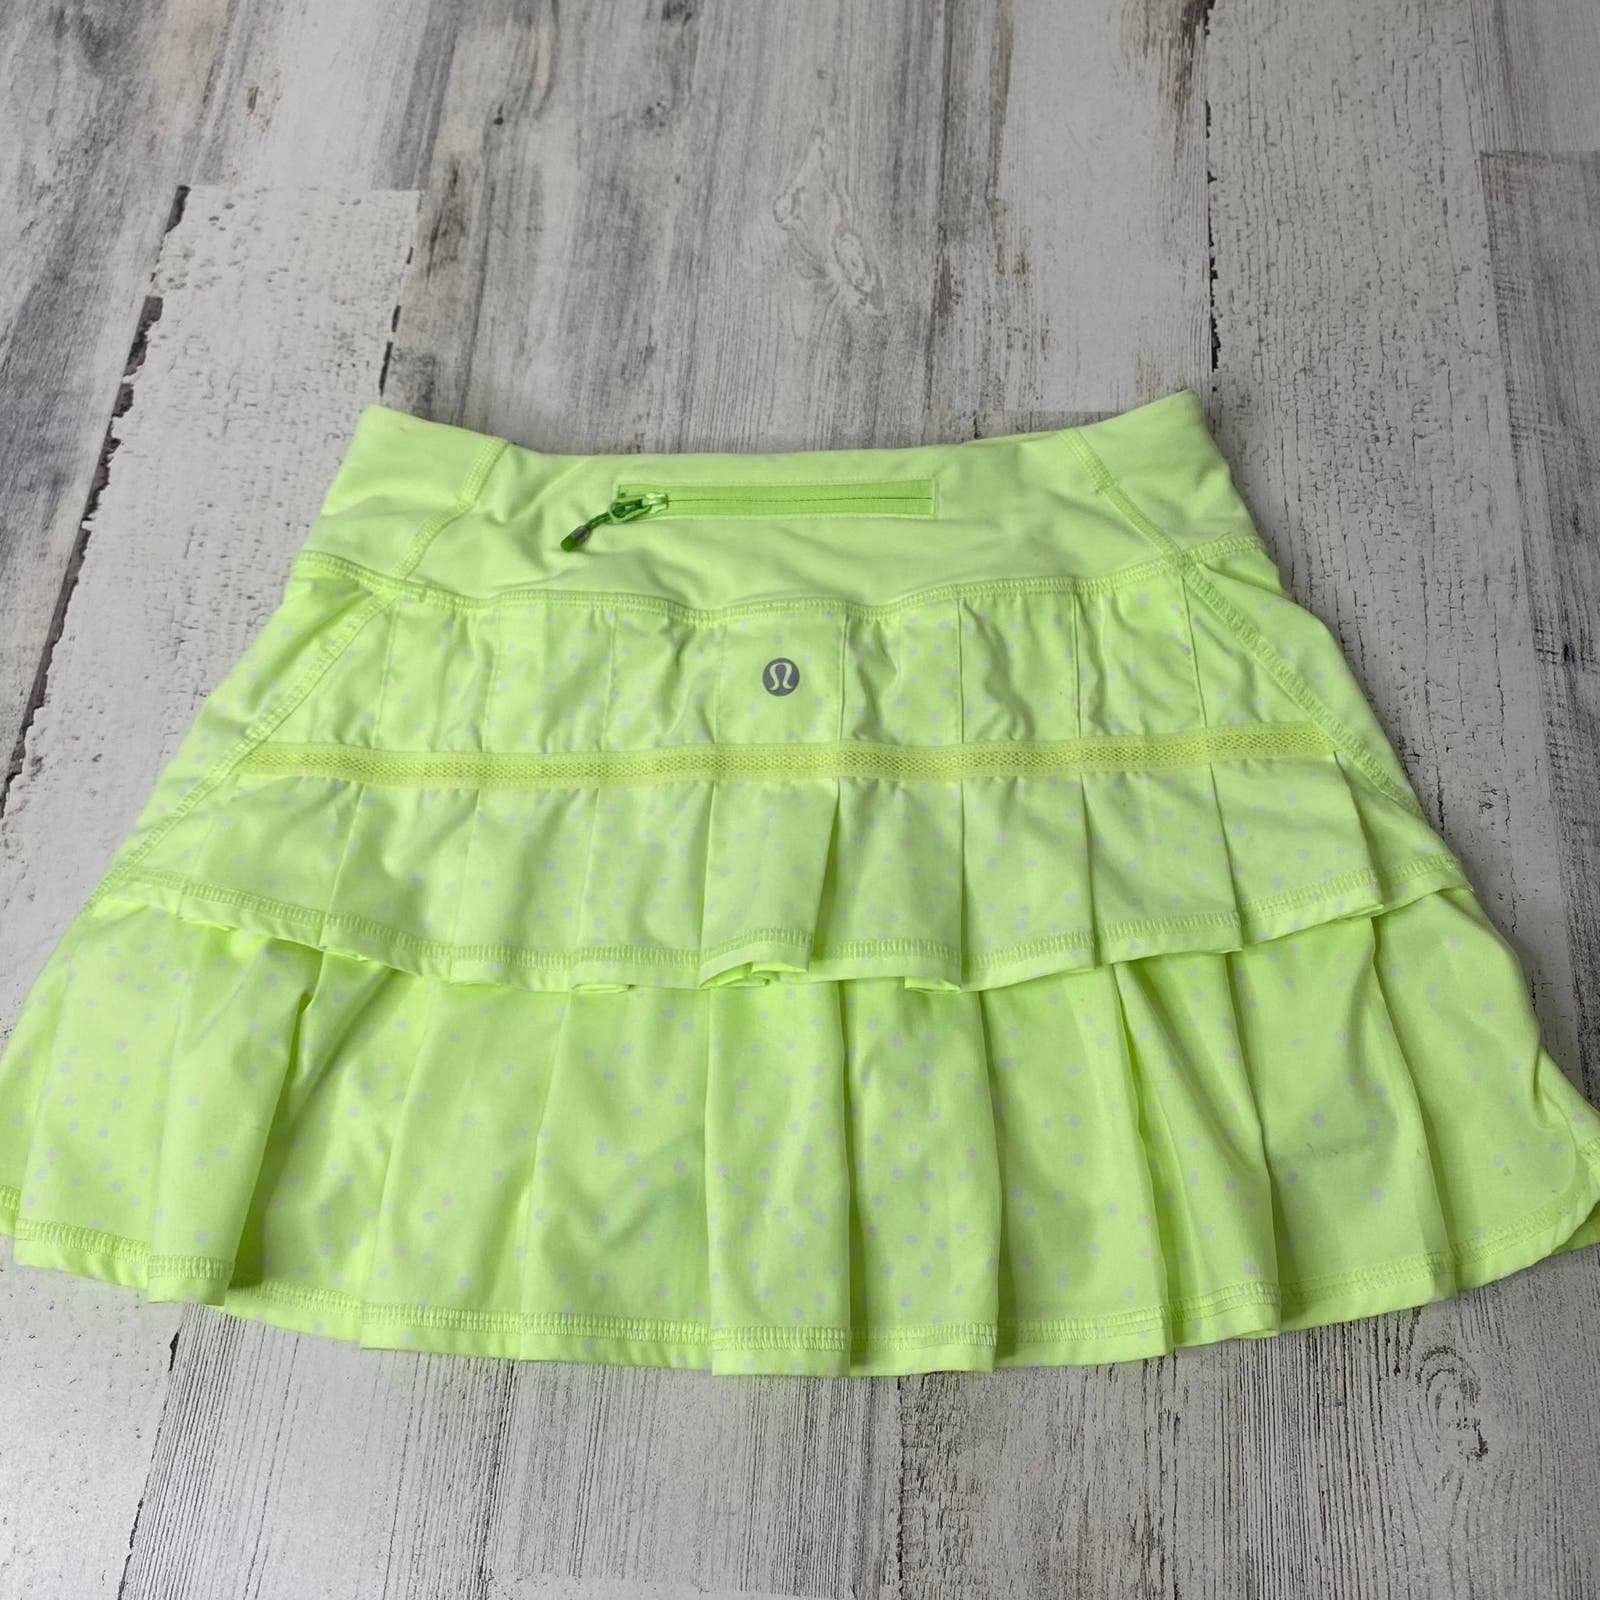 Authentic Lululemon Pace Setter Skirt Skorts neon Faded